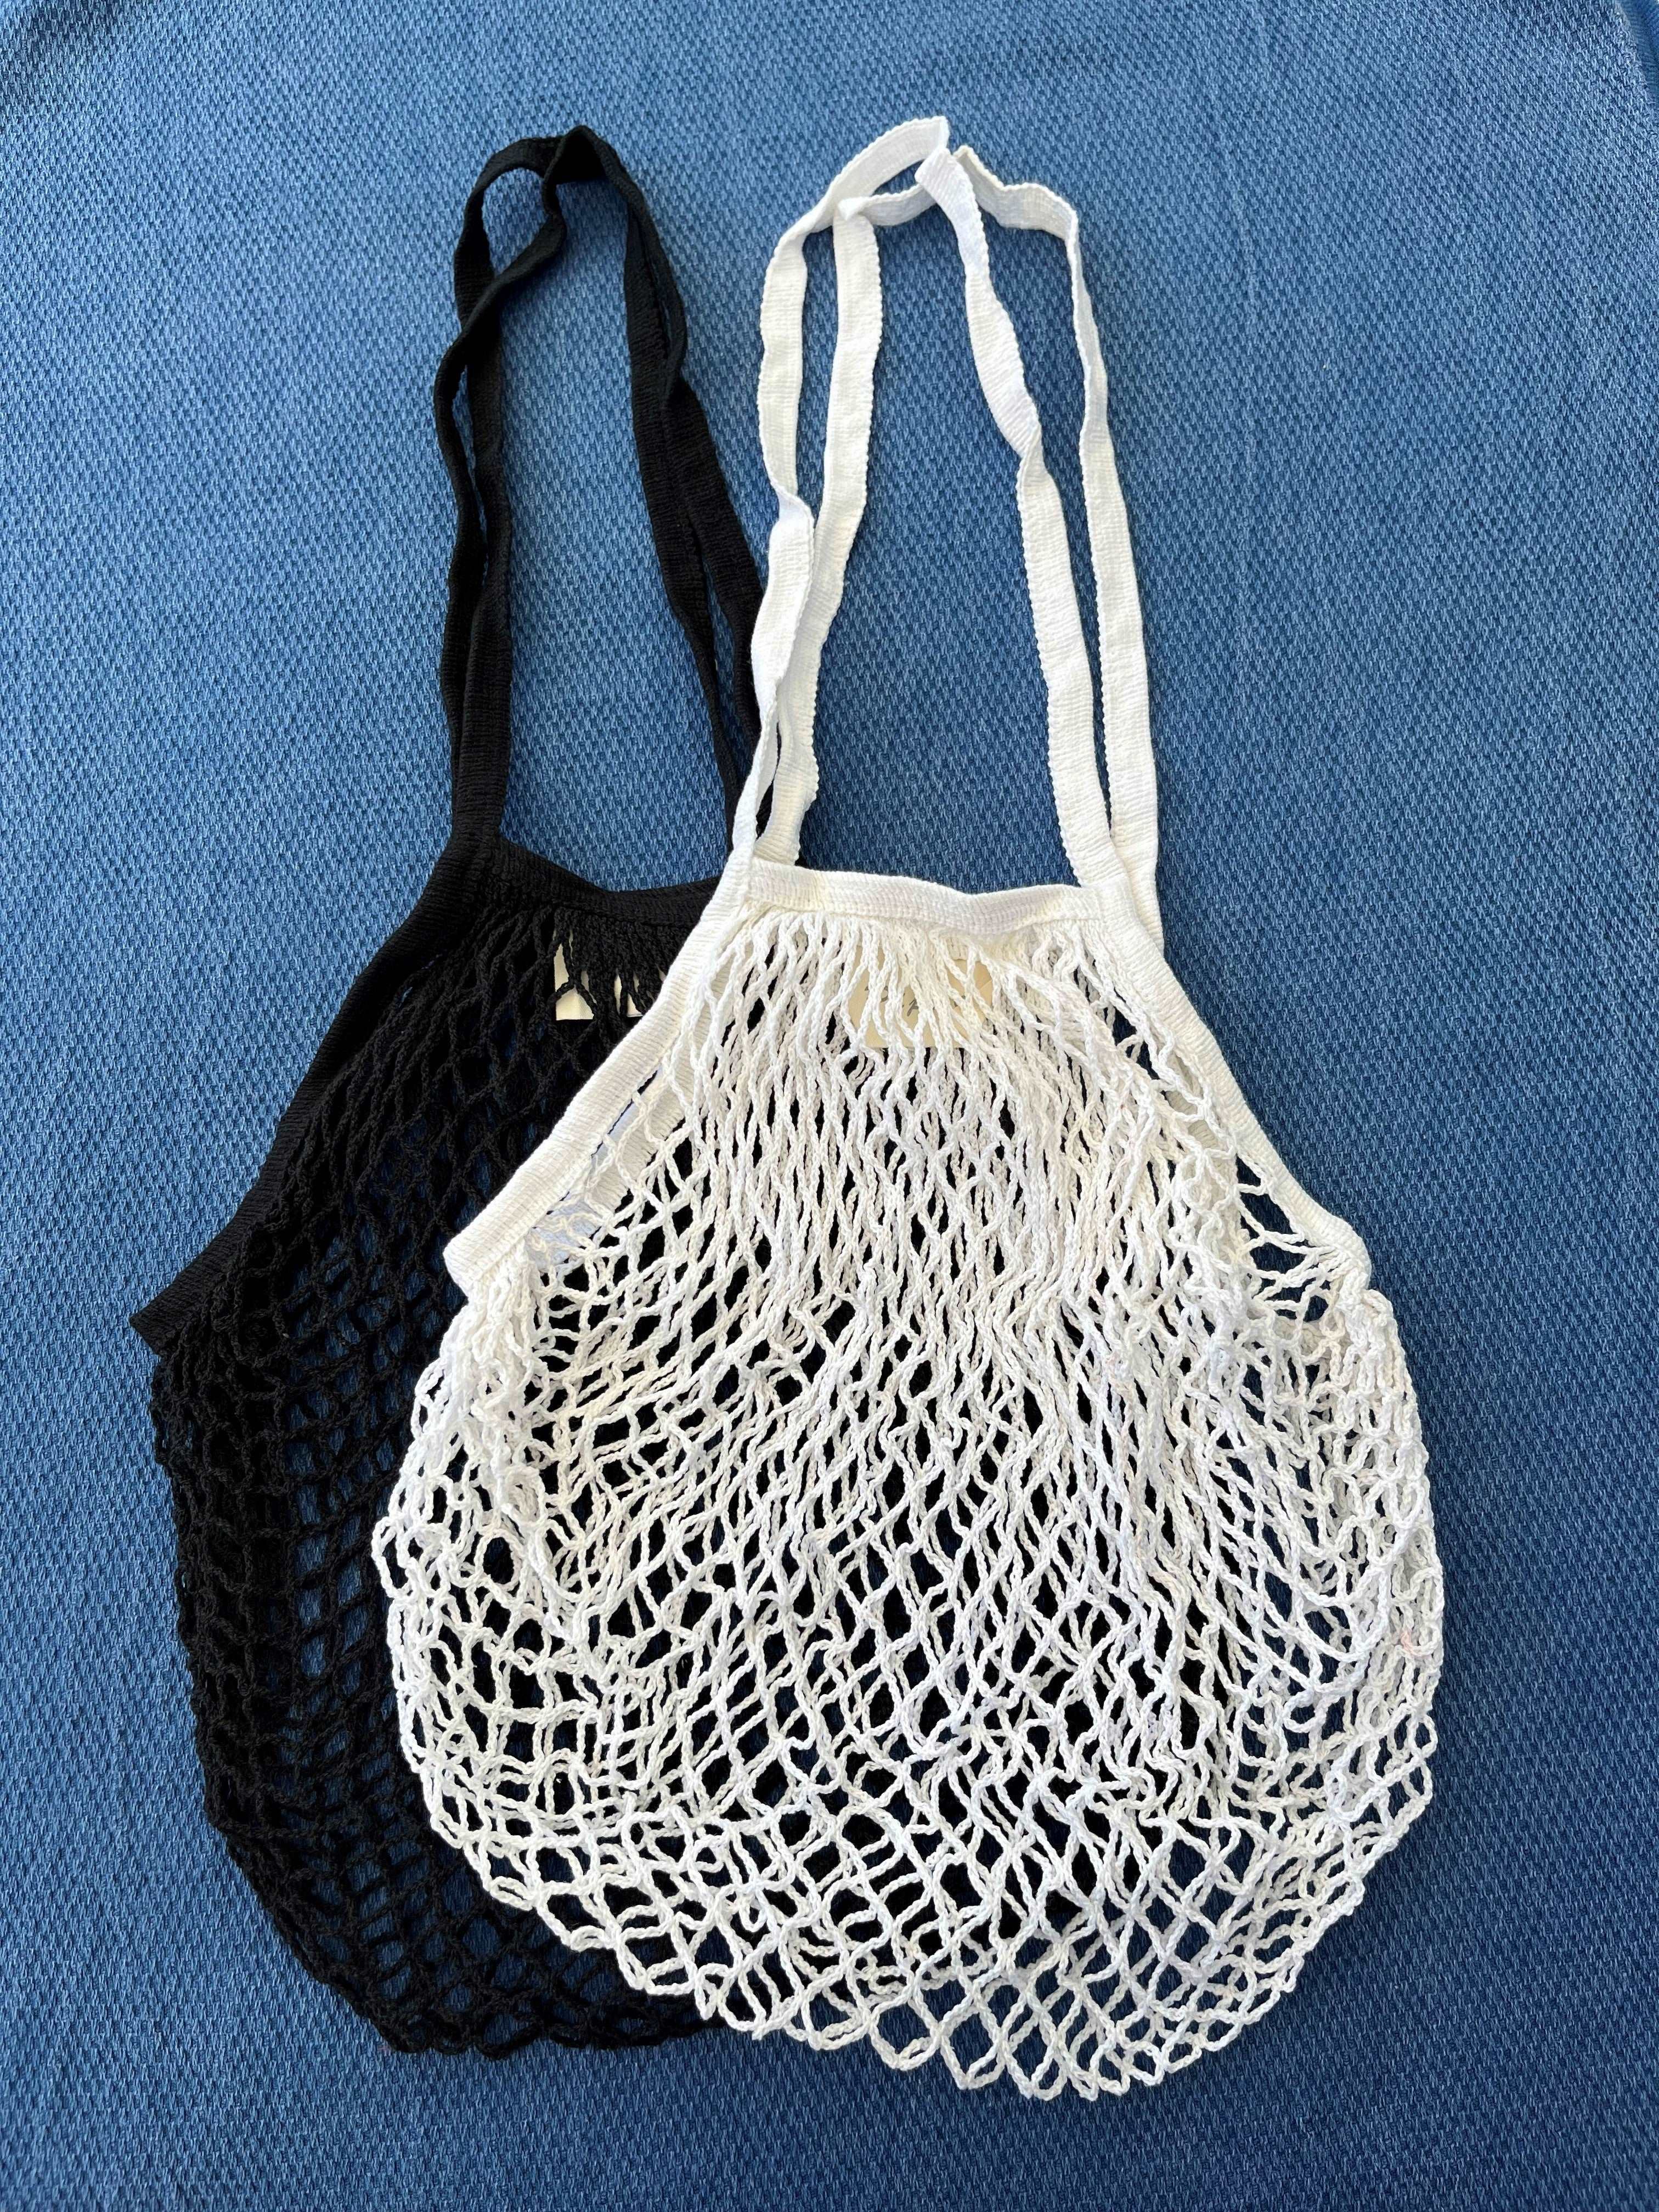 Sunny Cotton String Bag - Black or White